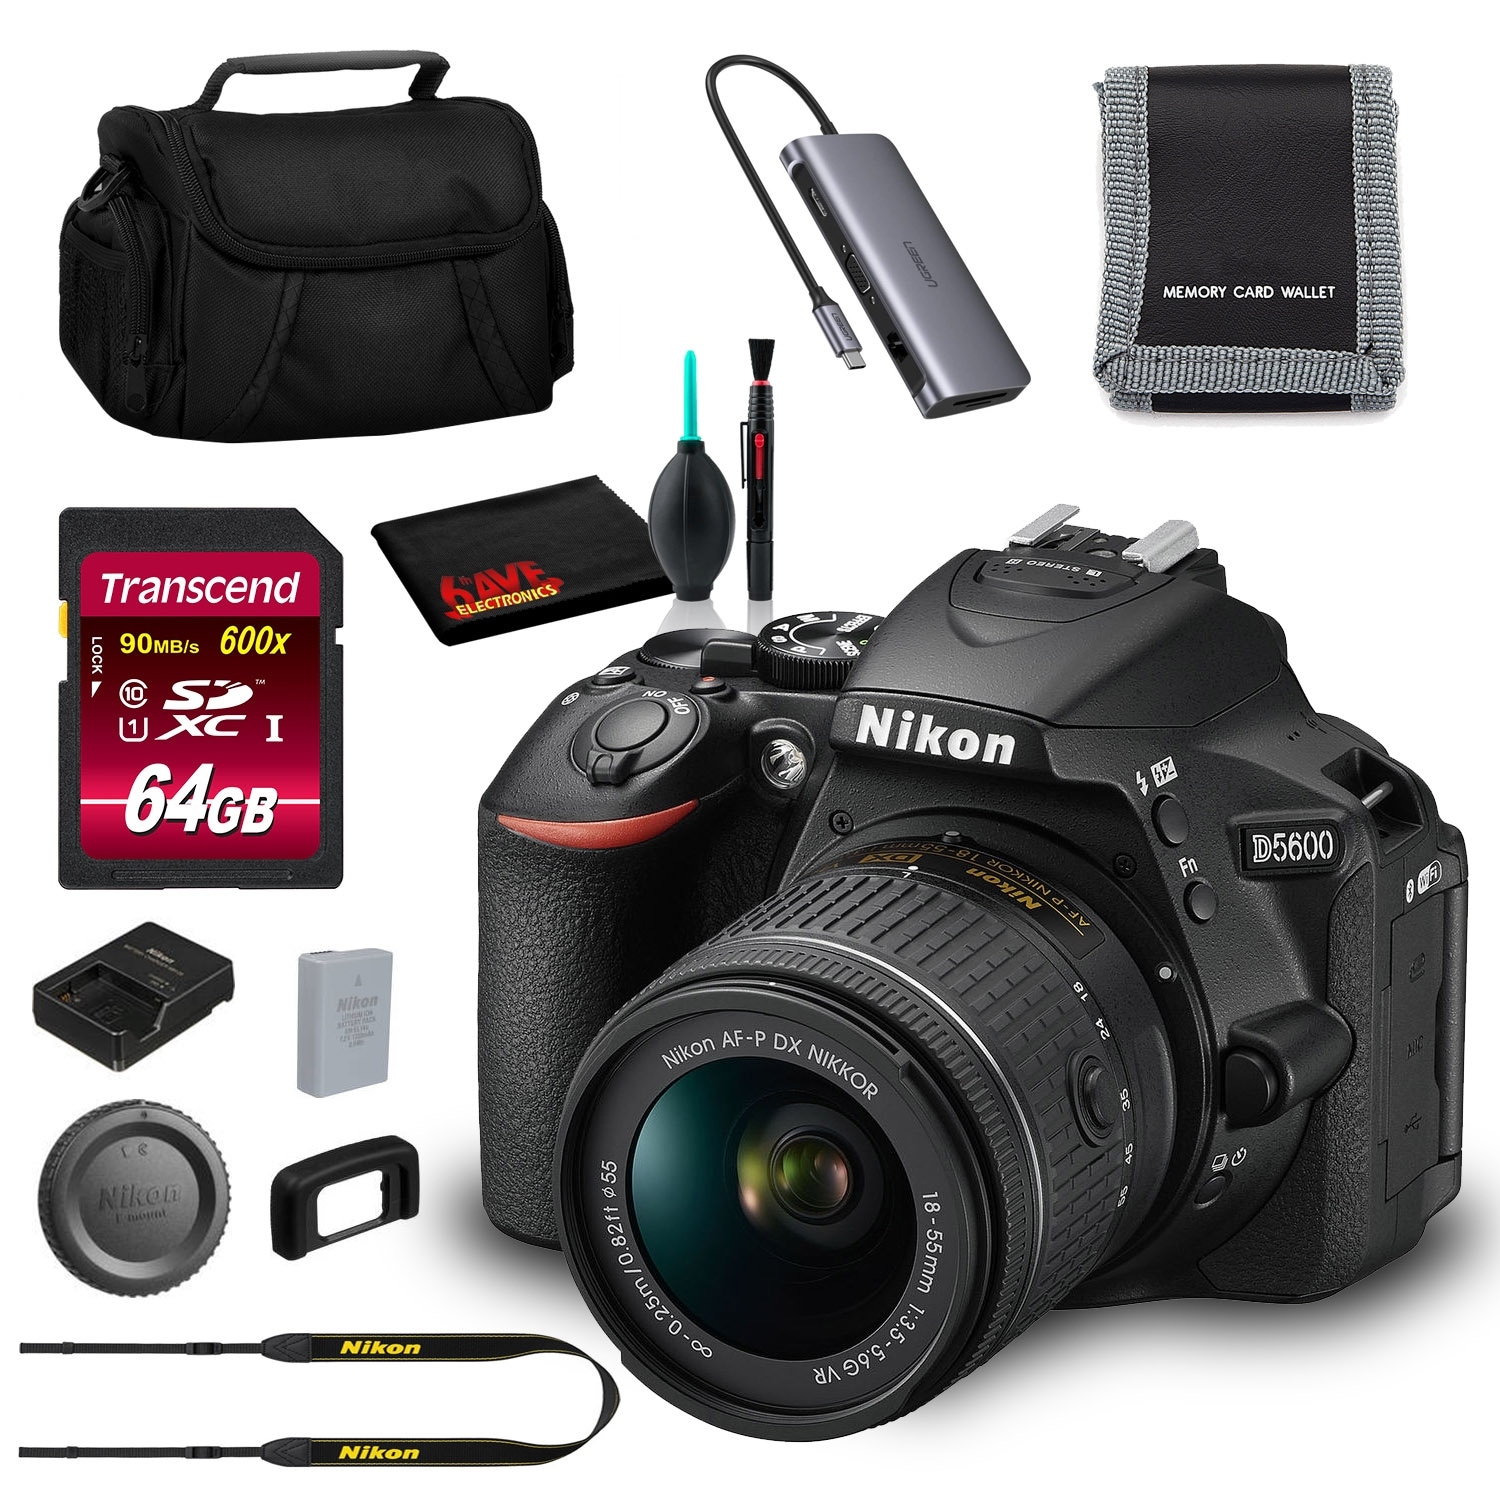 Nikon D5600 DSLR Camera with 18-55mm Lens (Intl Mo...